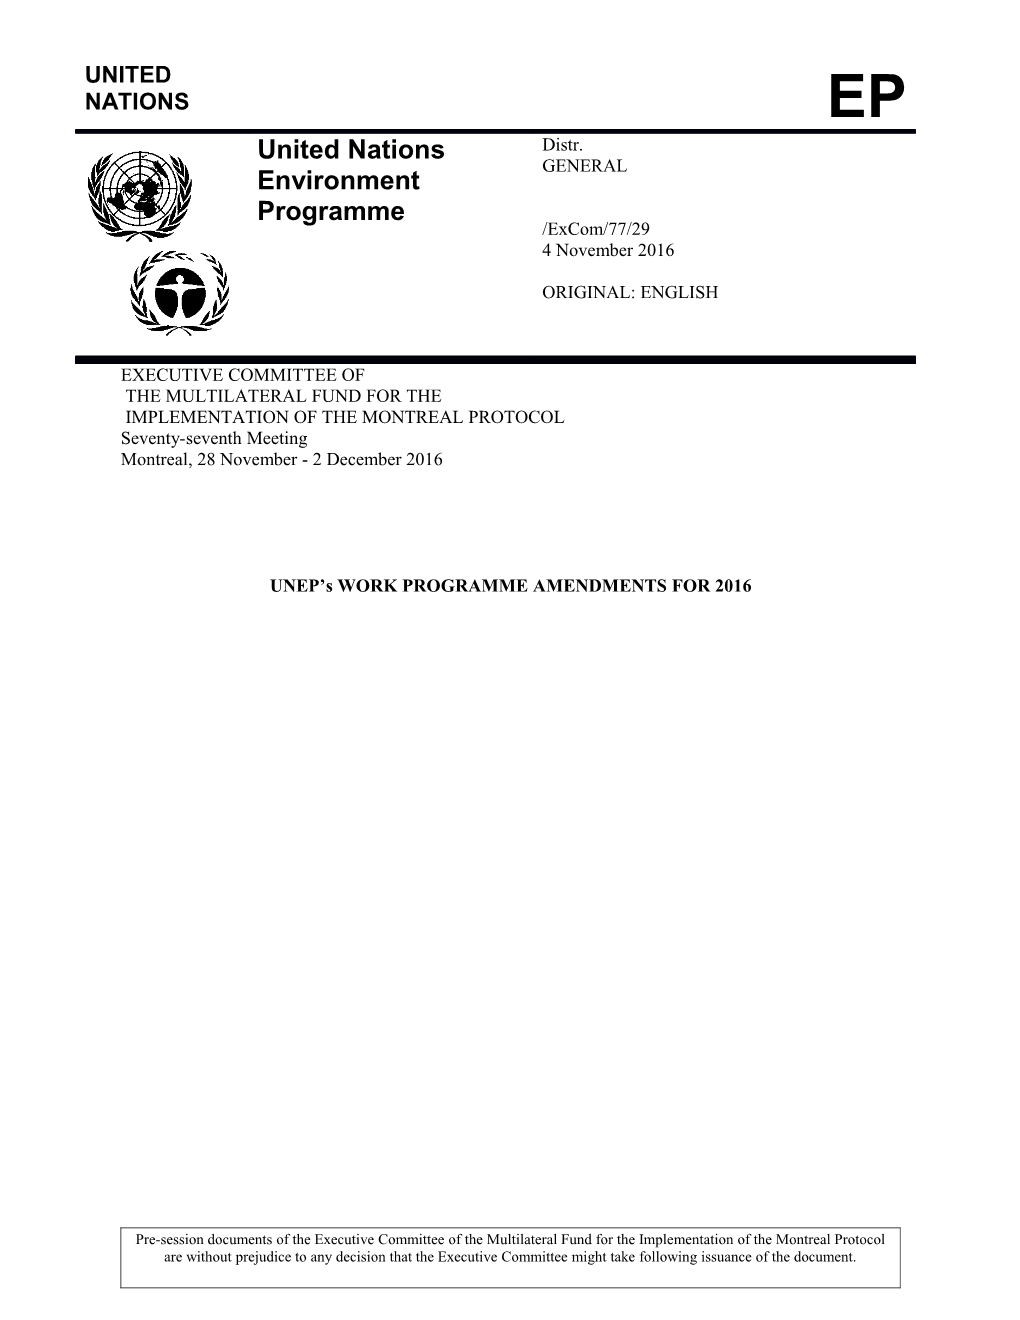 UNEP's Work Programme Amendment for 2016